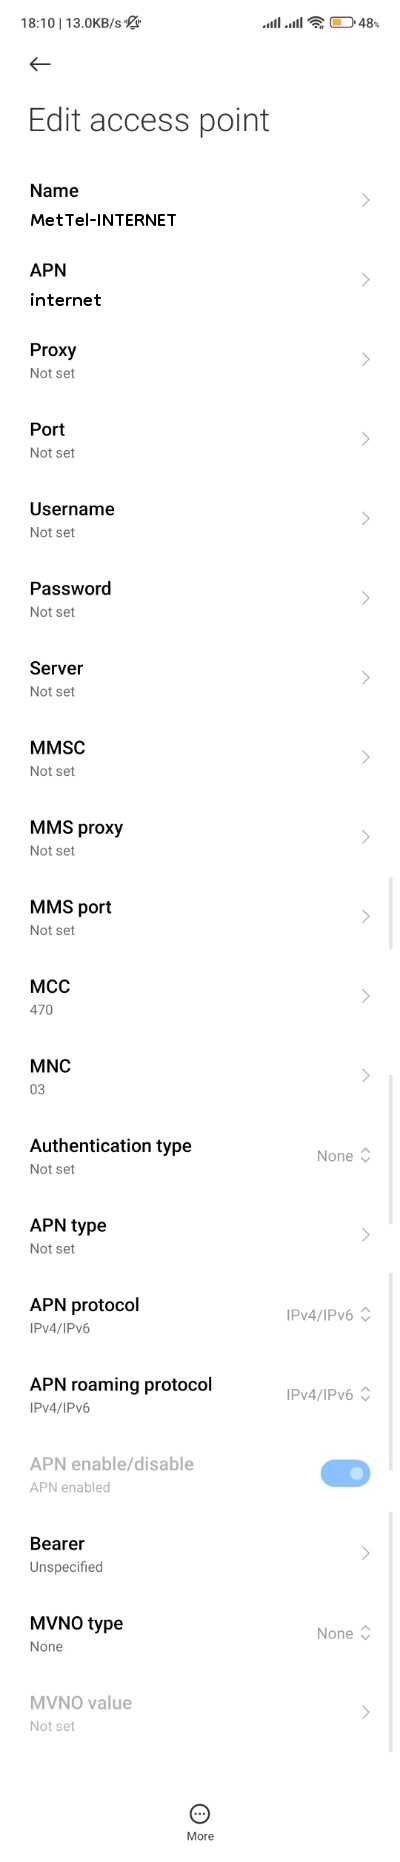 MetTel Mobile APN Setiings for Android iPhone 3G 4G Internet